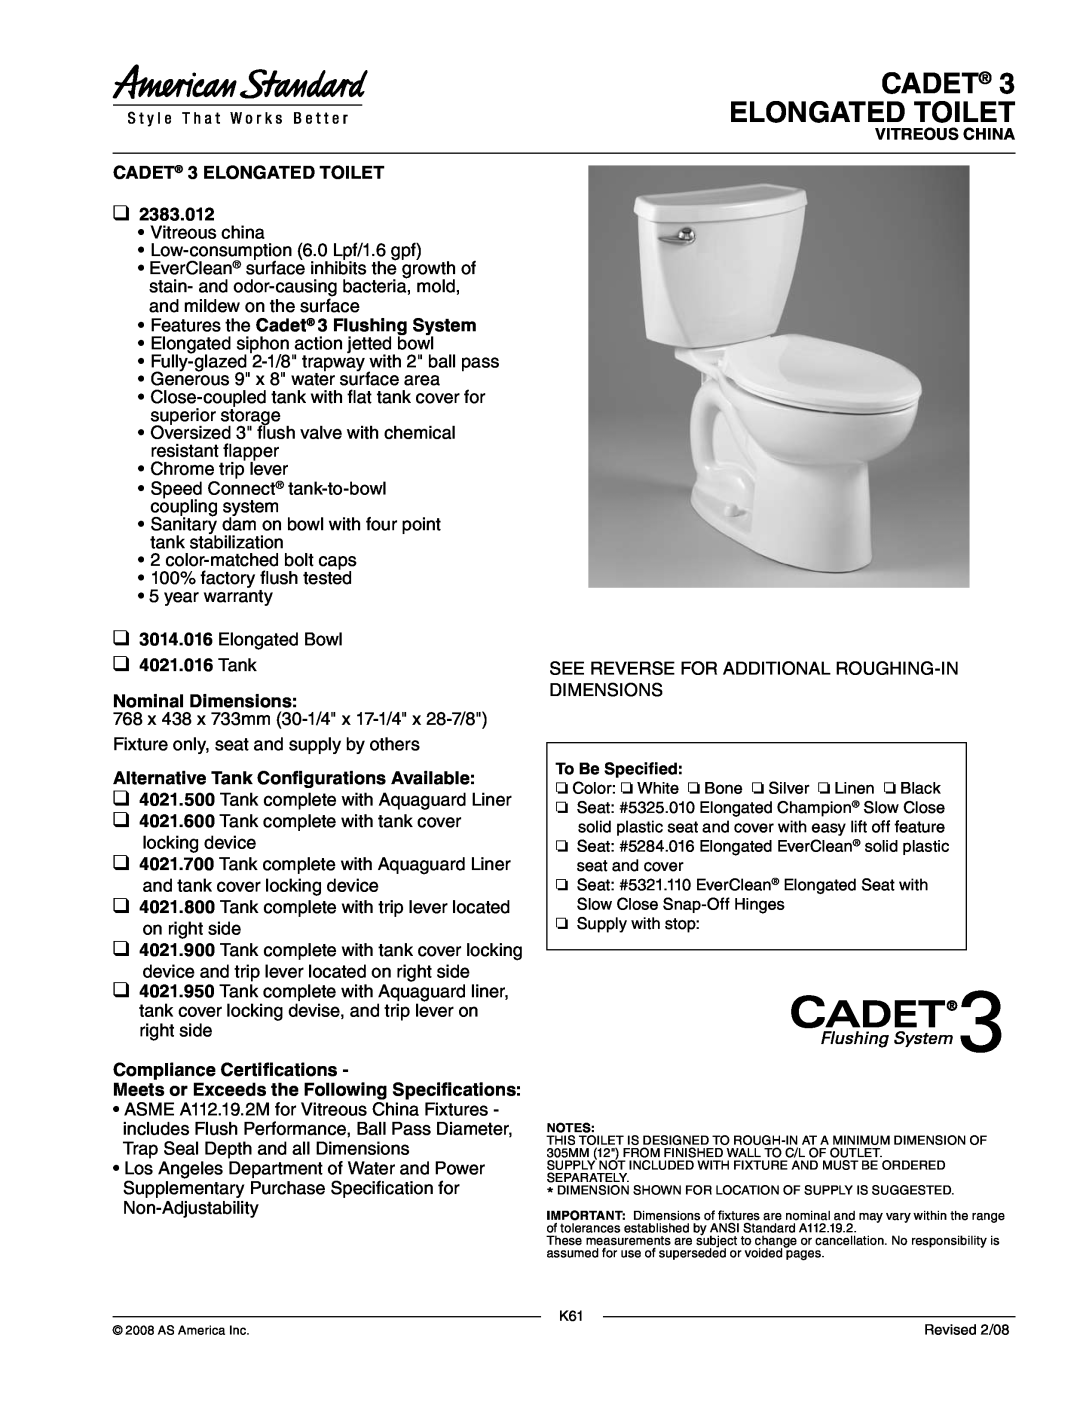 American Standard 2383.012, 4021.016 dimensions Cadet Elongated Toilet, CADET 3 ELONGATED TOILET, Tank, Nominal Dimensions 